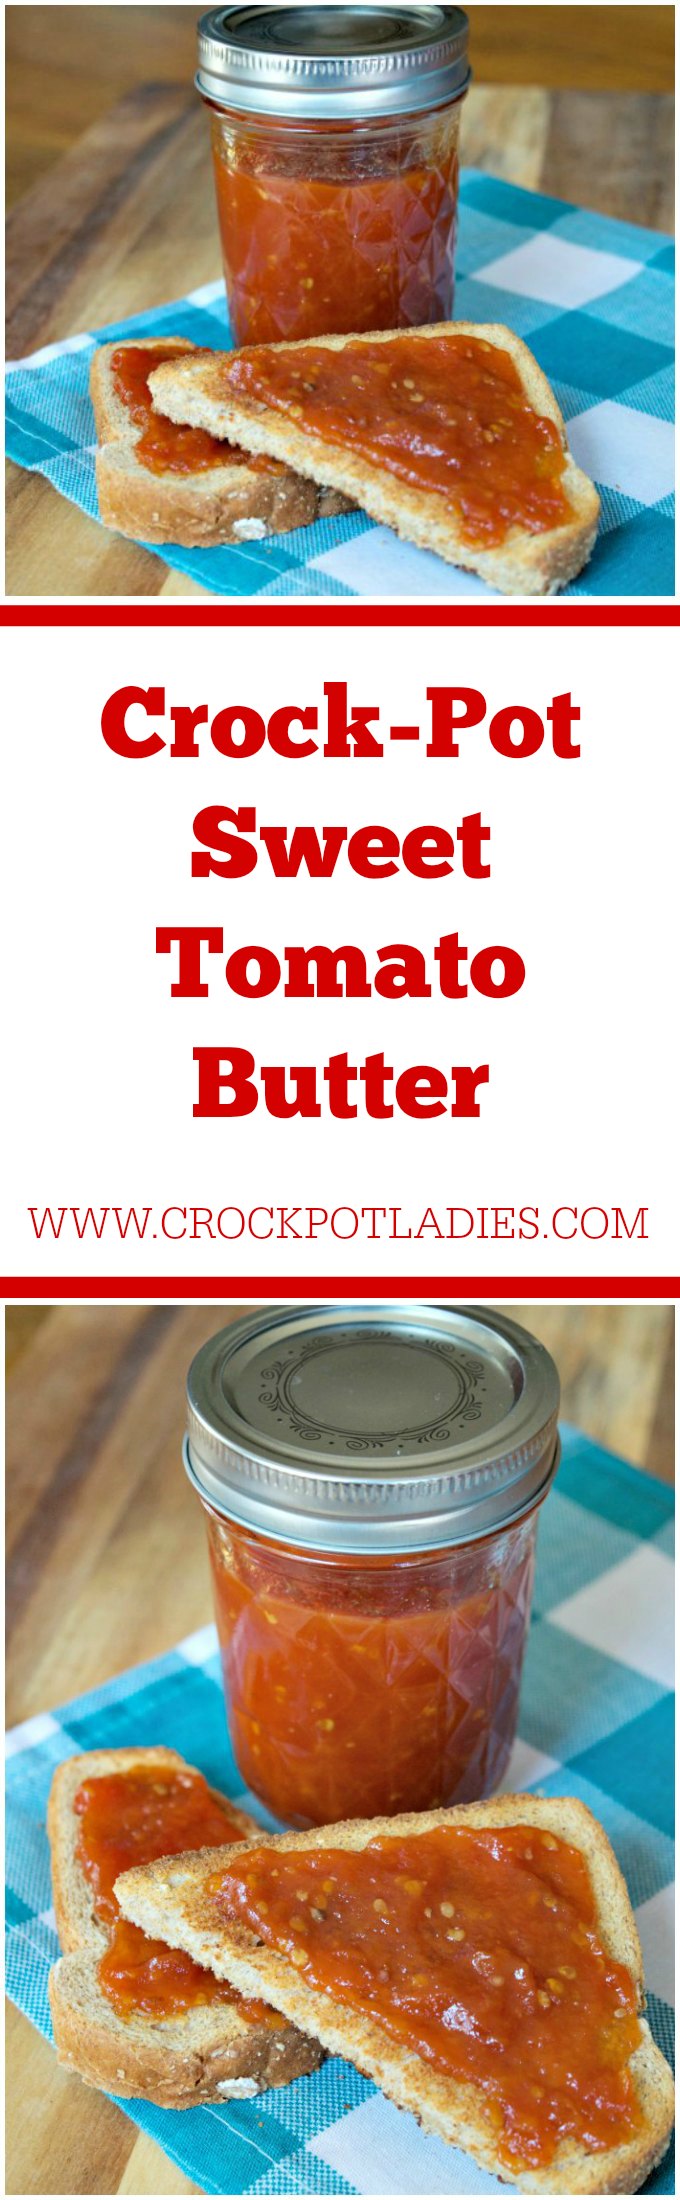 Crock-Pot Sweet Tomato Butter